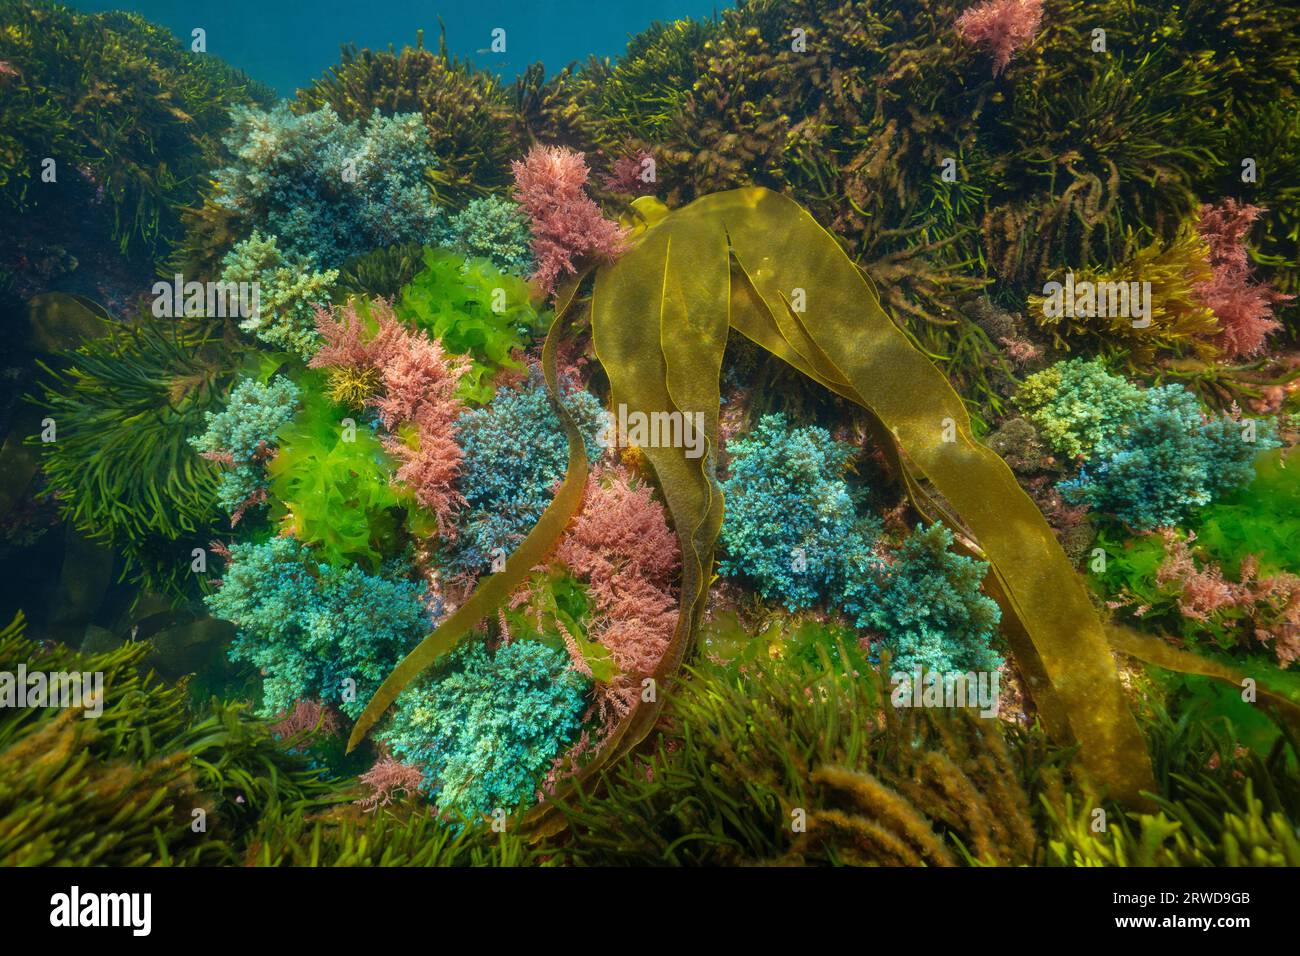 Various seaweed with different colors underwater in the Atlantic ocean, natural scene, Spain, Galicia, Rias Baixas Stock Photo